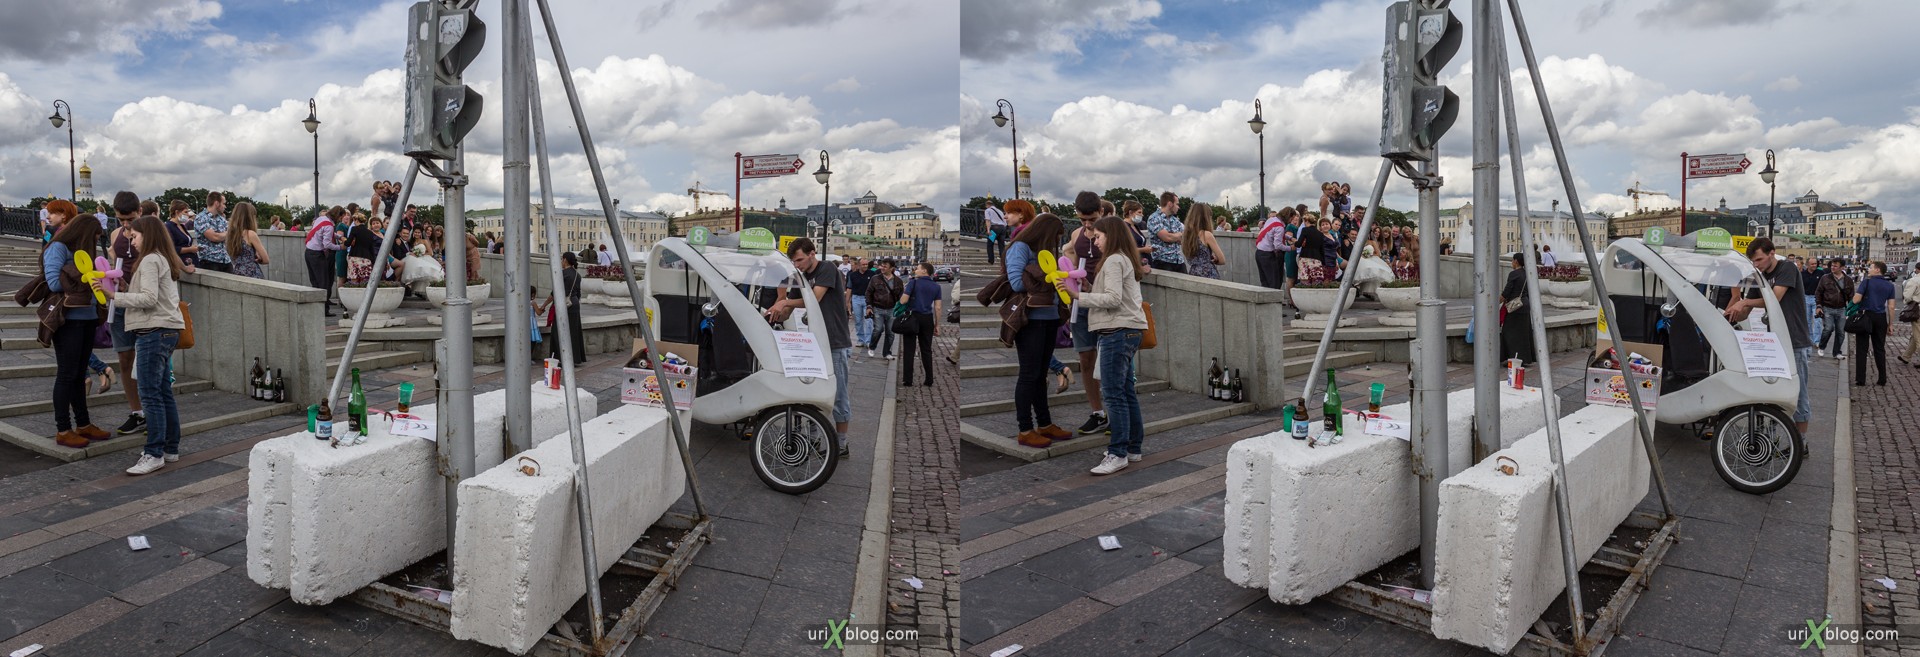 2013, Luzhkov bridge, Moscow, Russia, 3D, stereo pair, cross-eyed, crossview, cross view stereo pair, stereoscopic